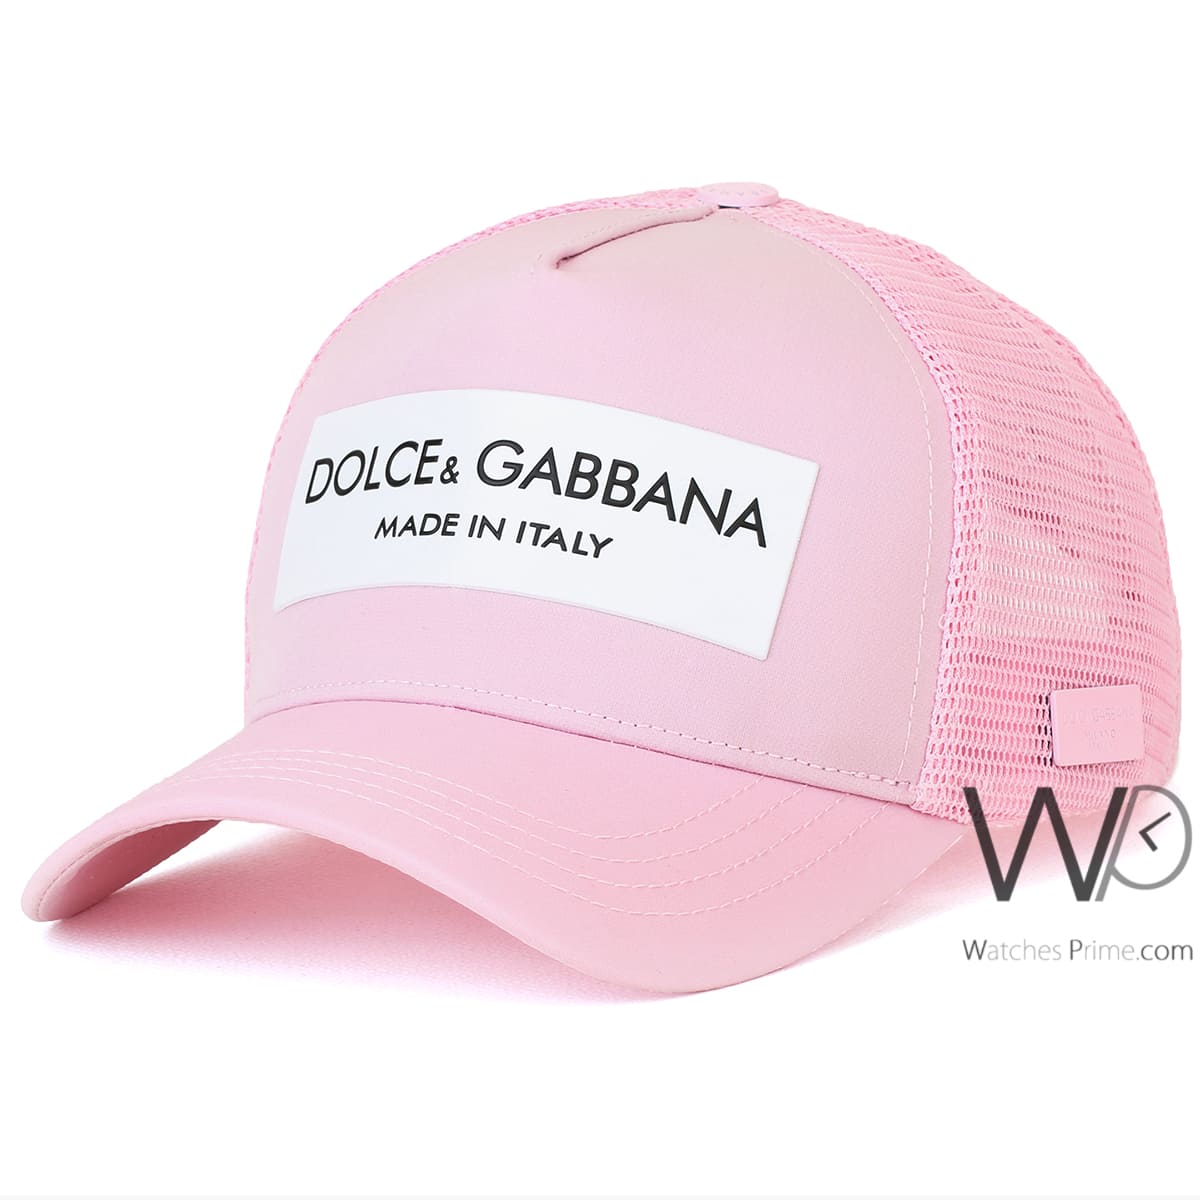 dolce-gabbana-dg-made-in-italy-trucker-pink-cap